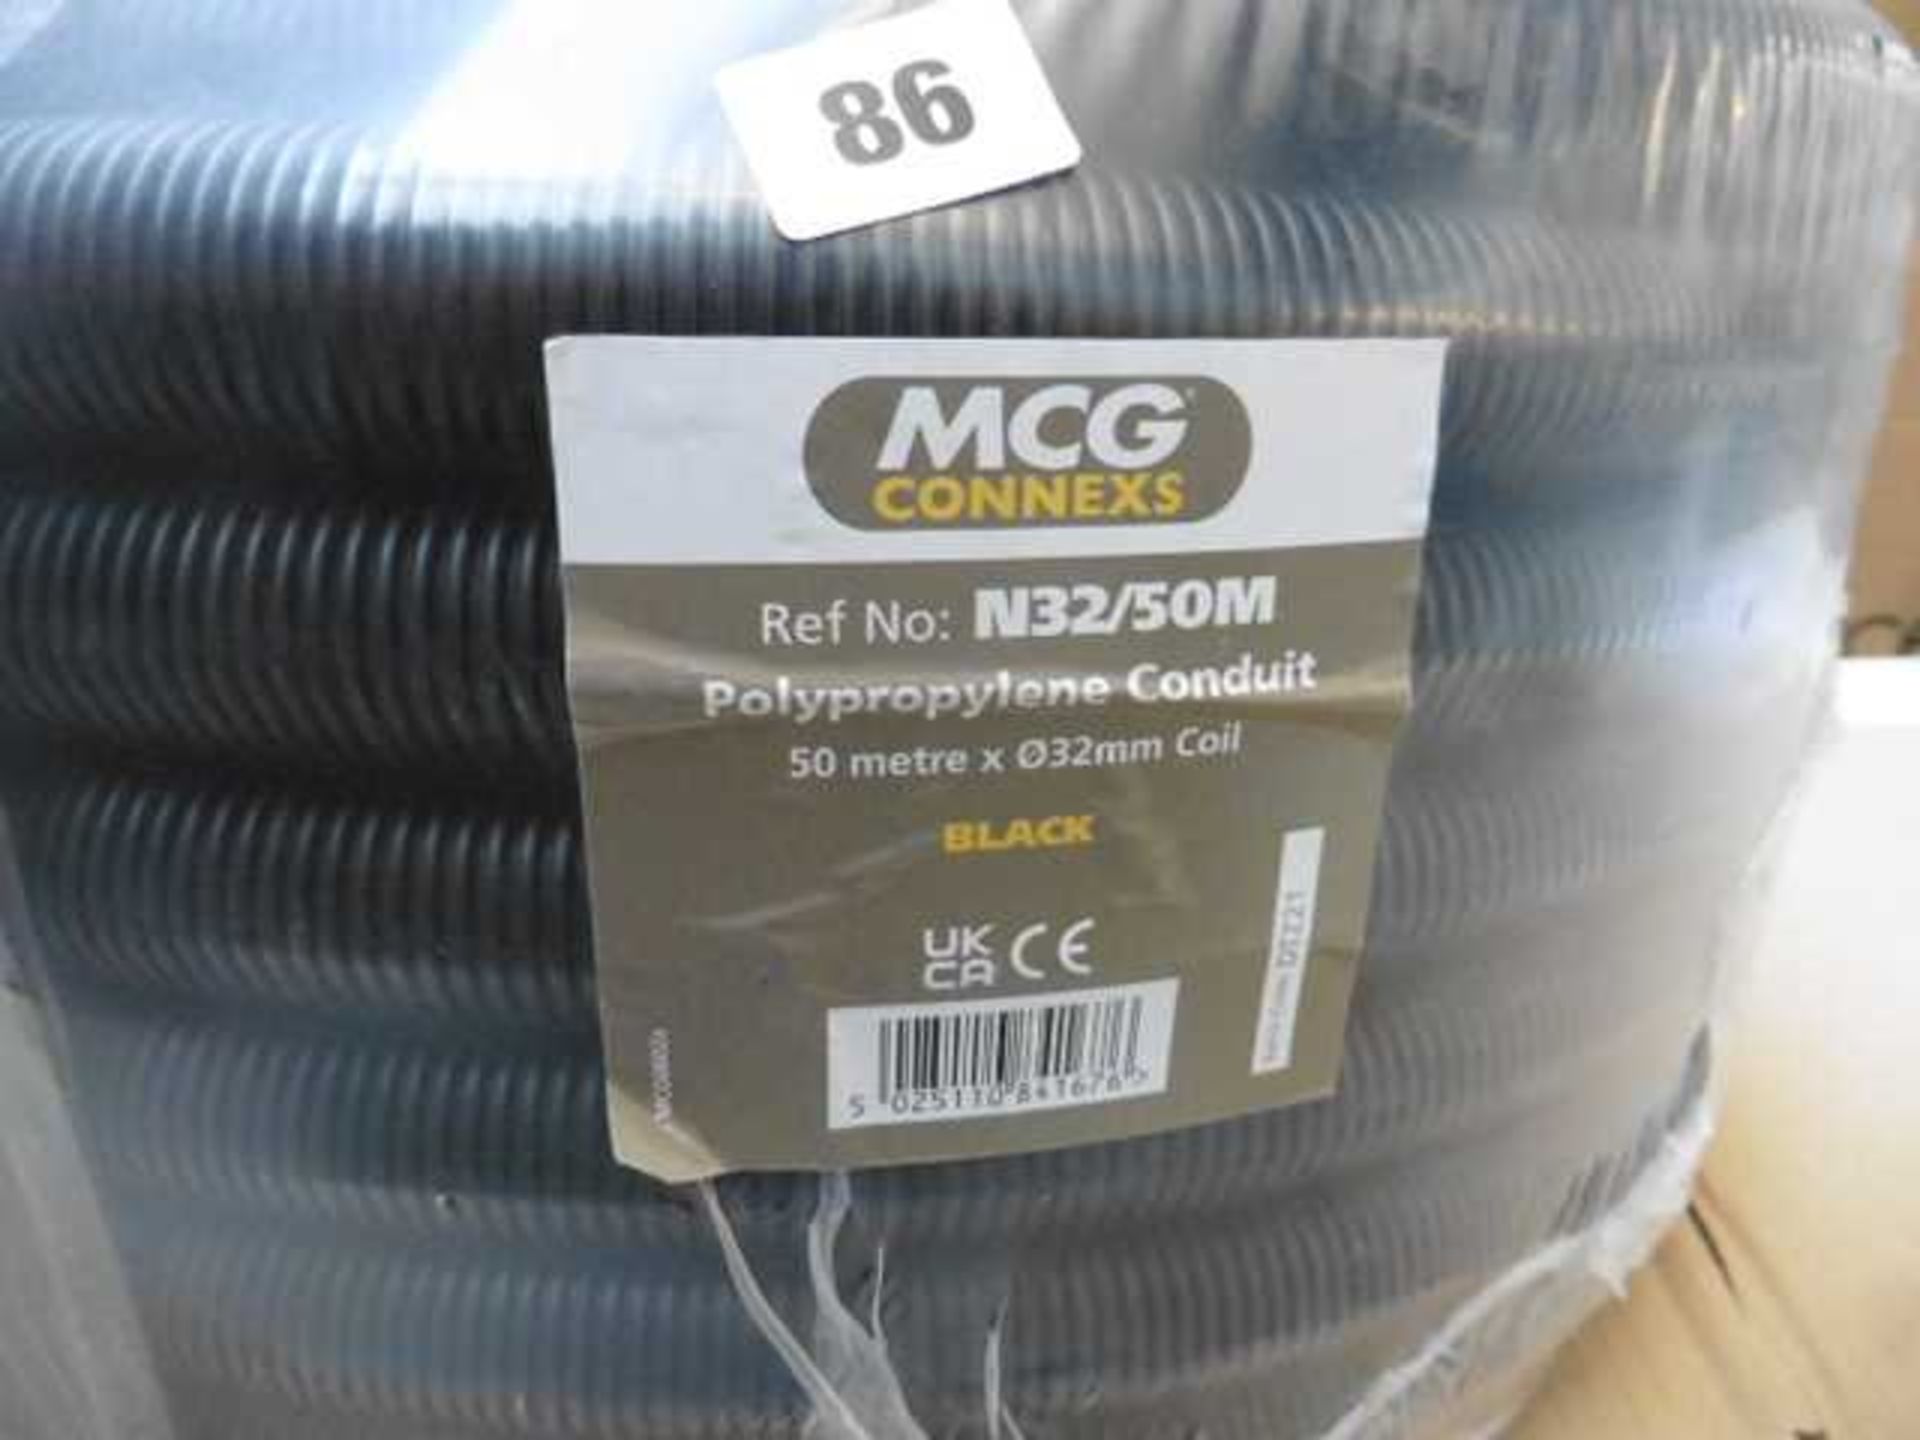 +VAT 2 Quills of MCG Connexs Polypropylene conduit 50m x 32mm in black - Image 2 of 2